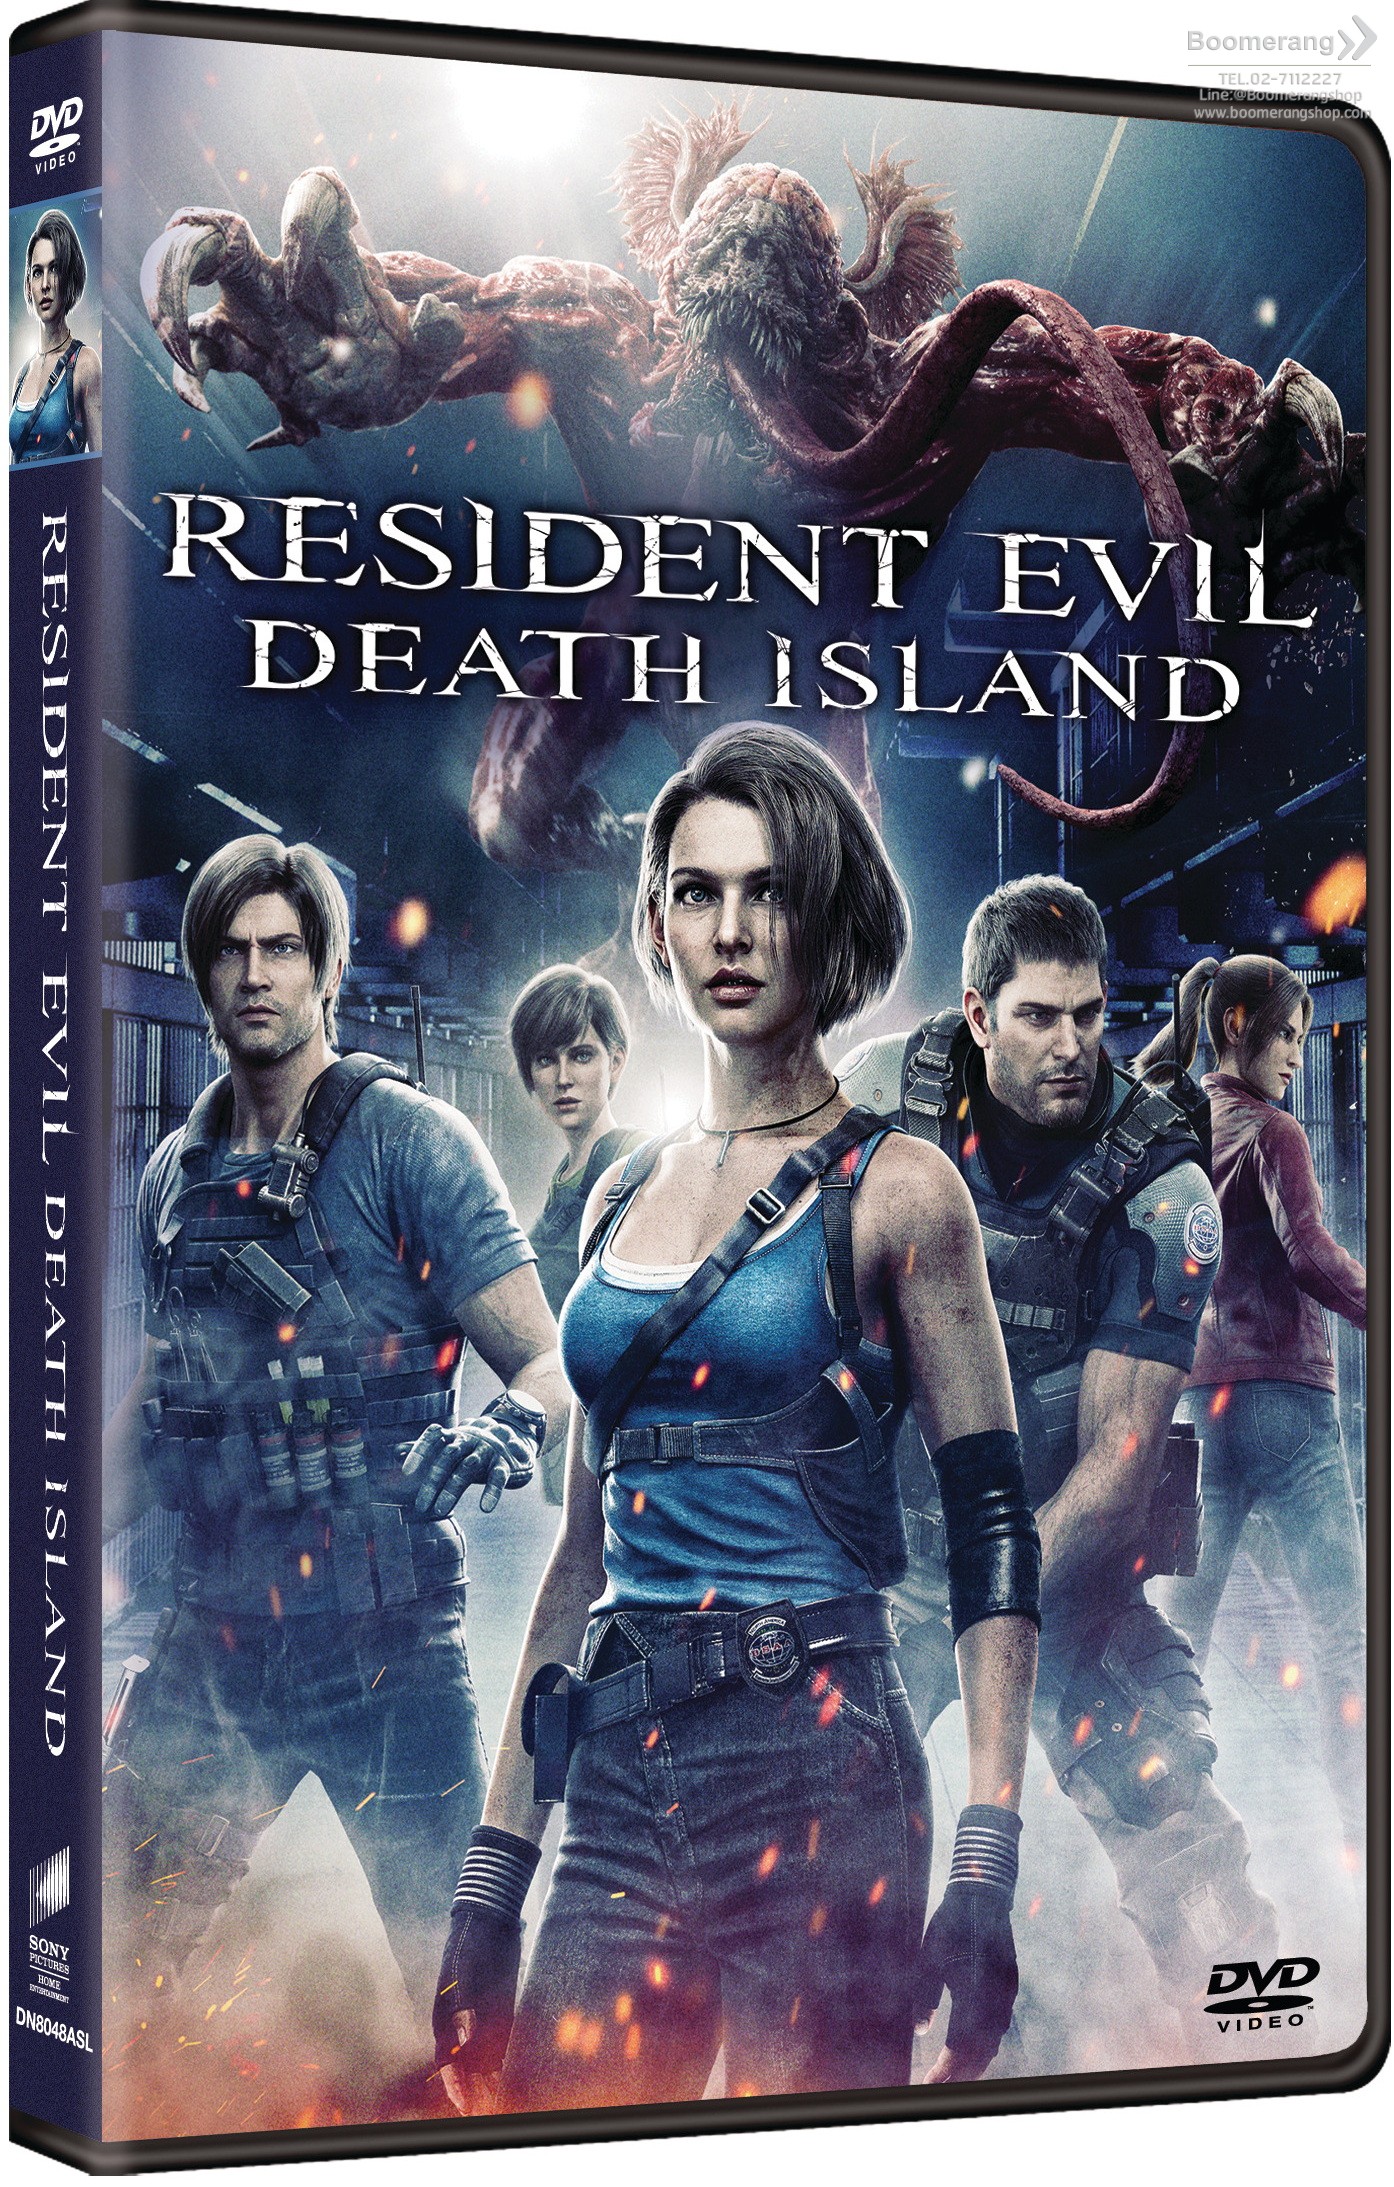 Resident evil : death island